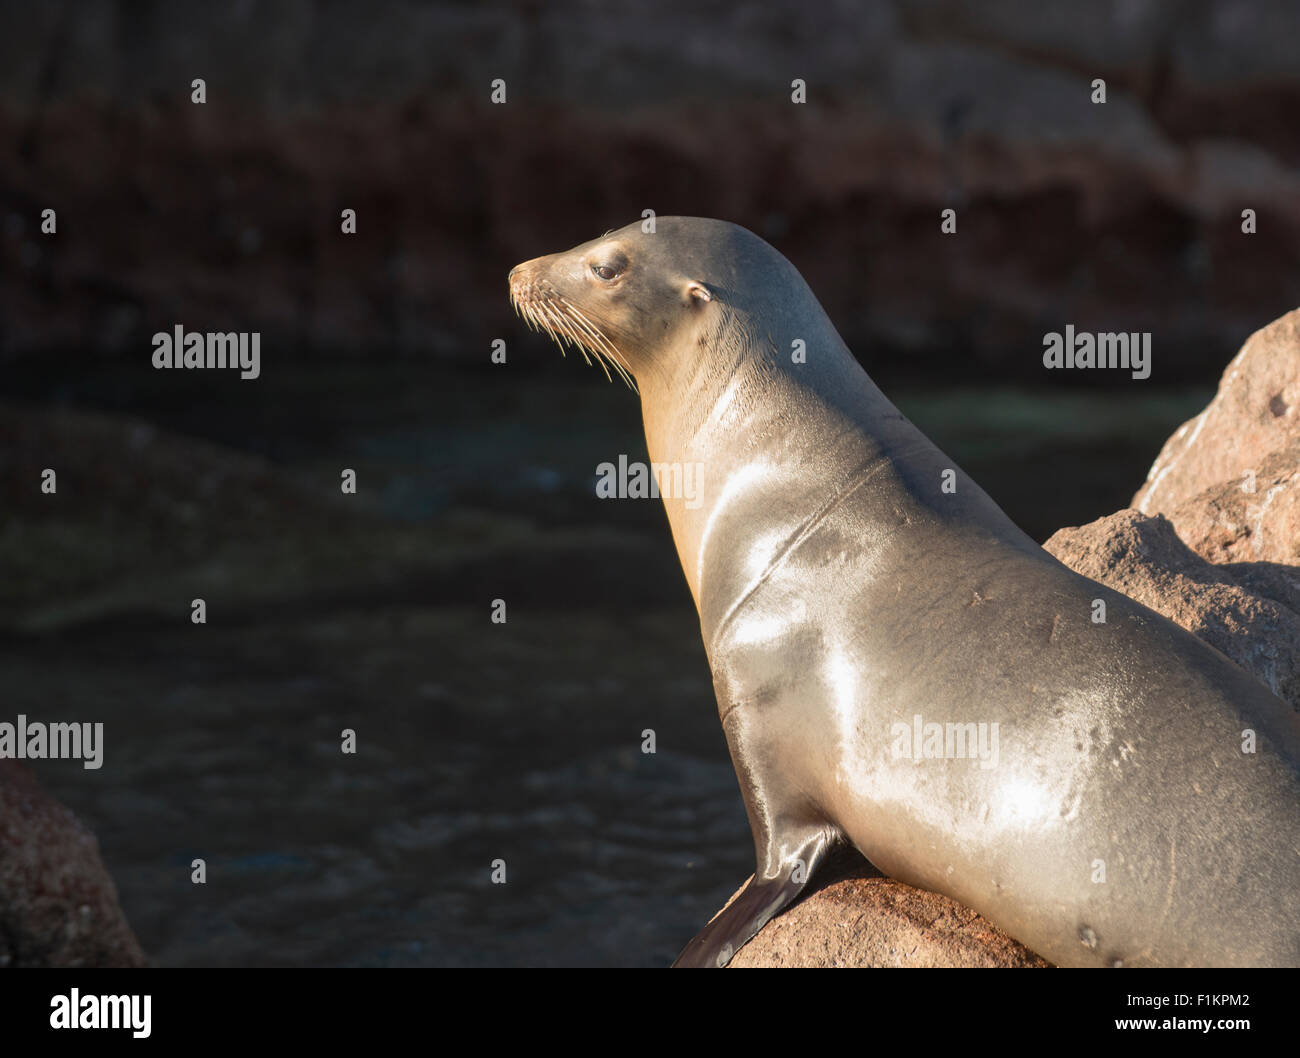 Mexico, Baja, Lapaz, Espiritu Santo. Sea lions sunbathing on rocks. Stock Photo